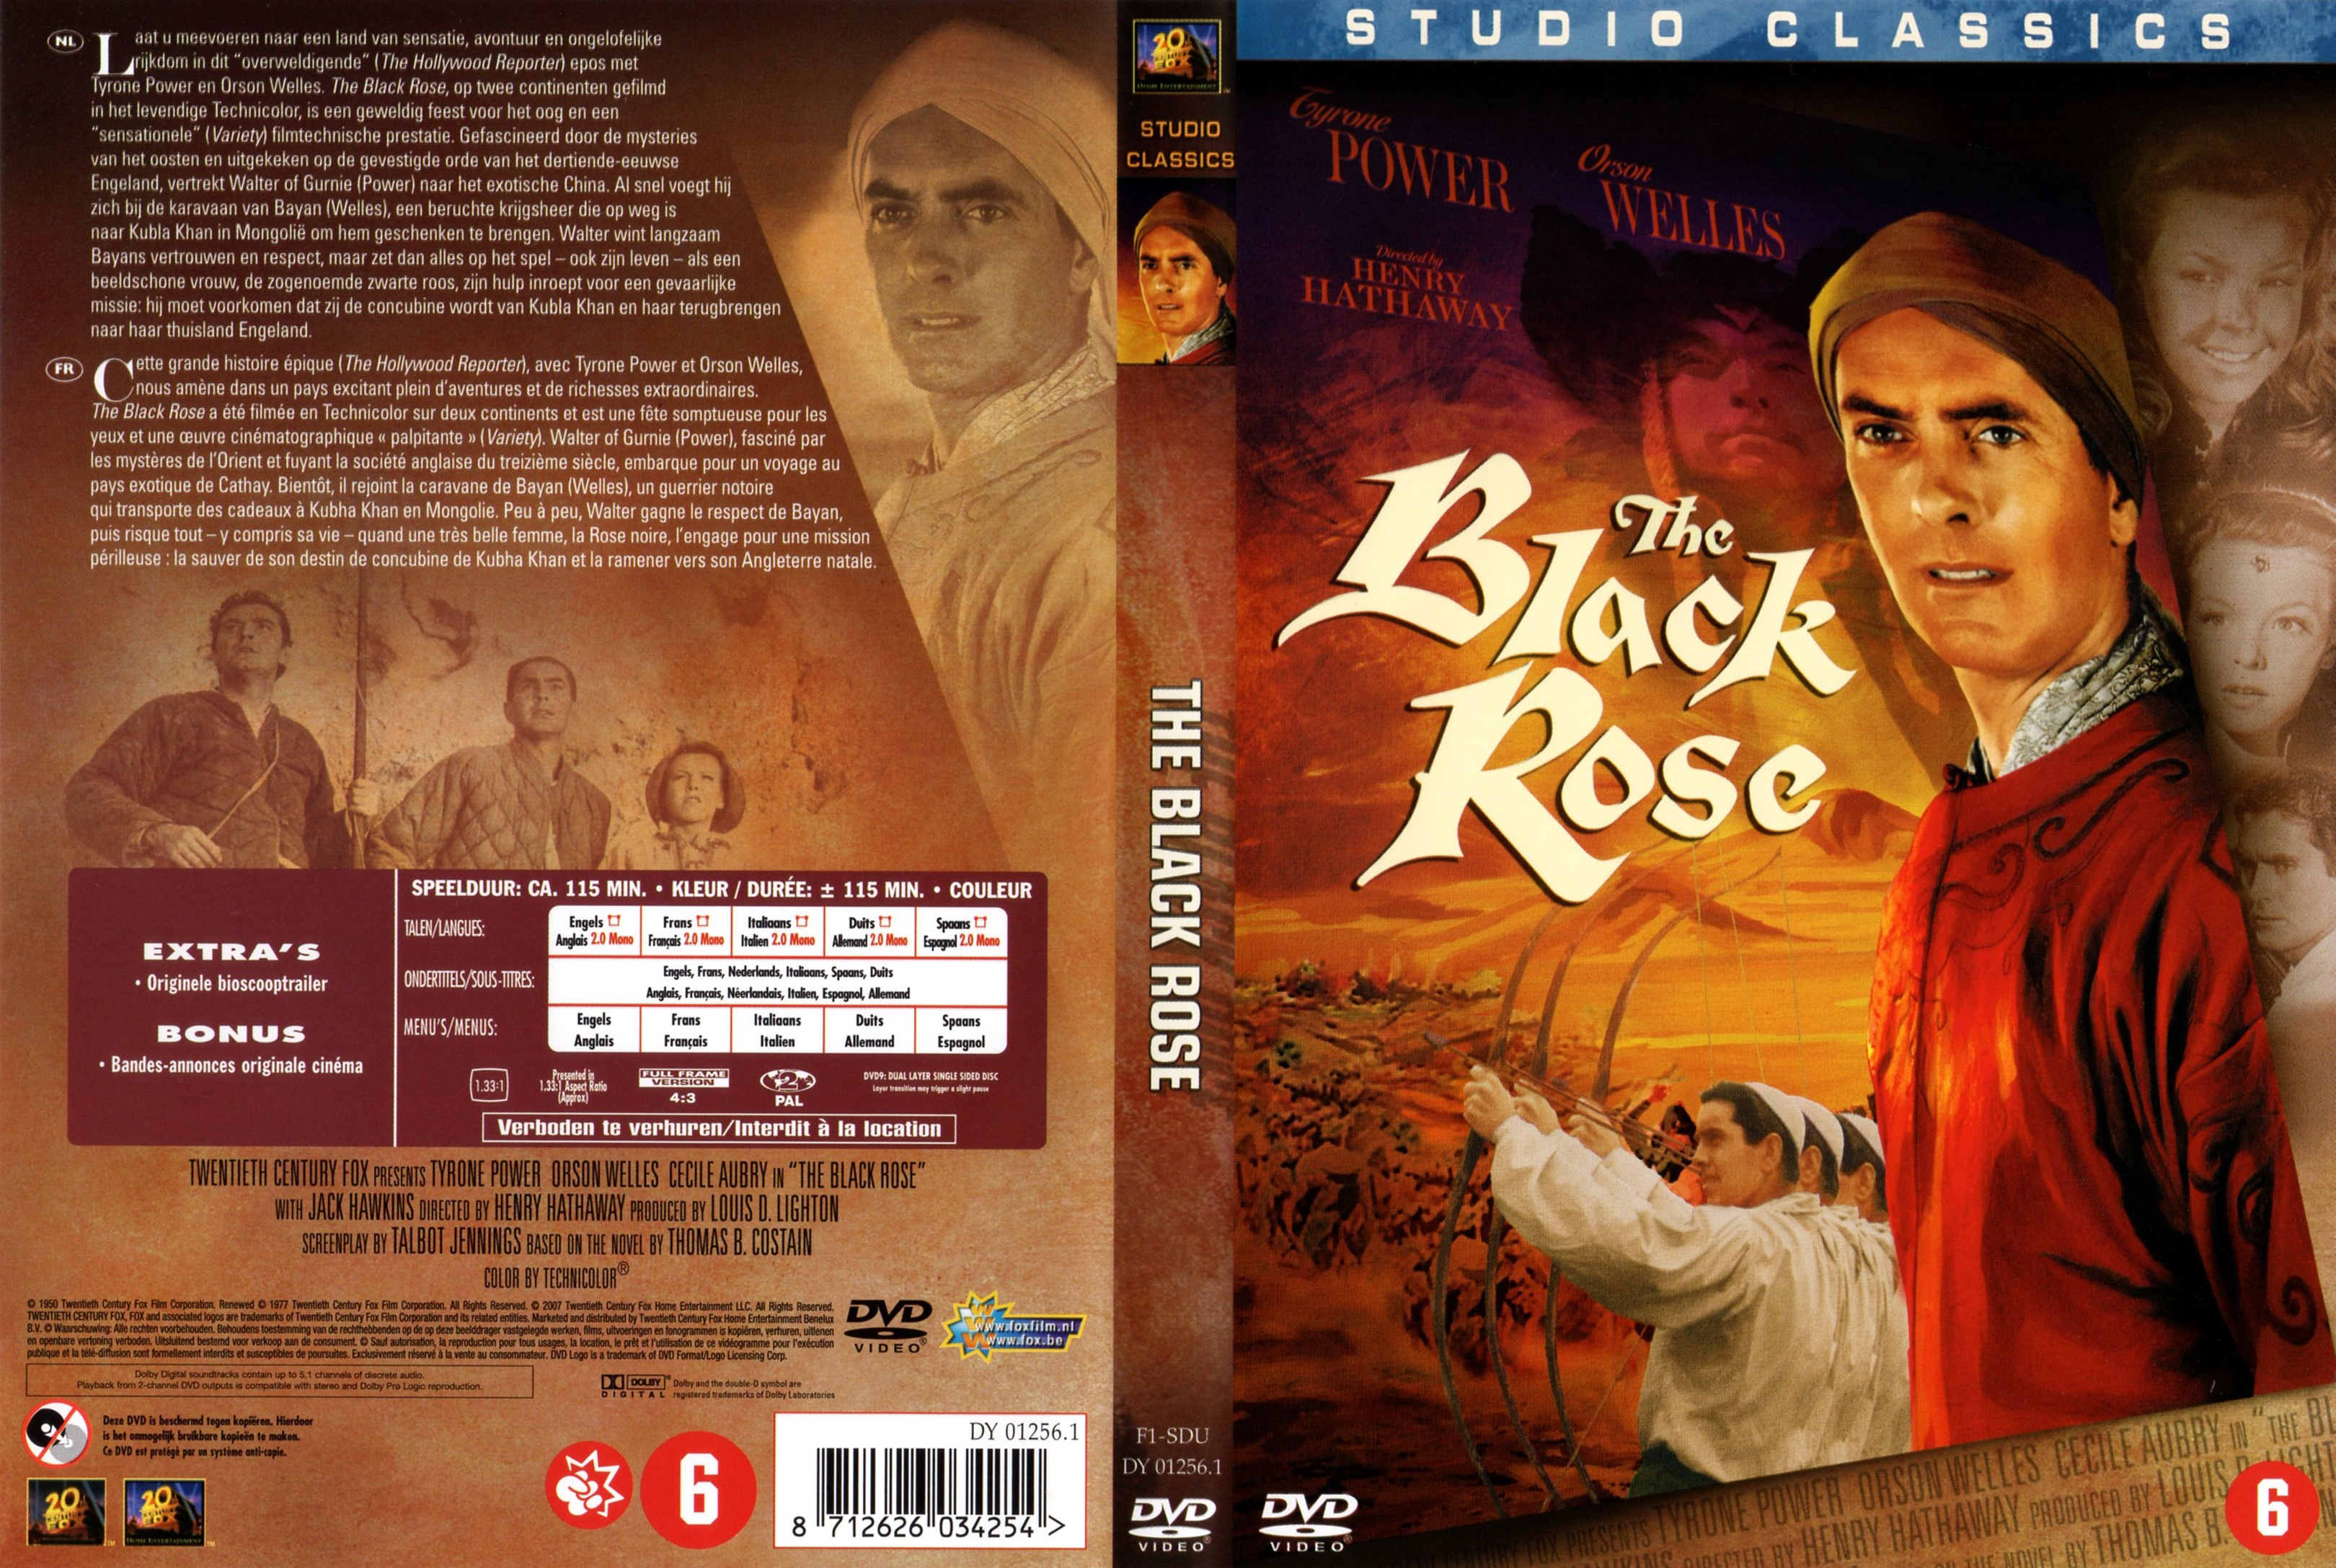 Jaquette DVD The Black Rose